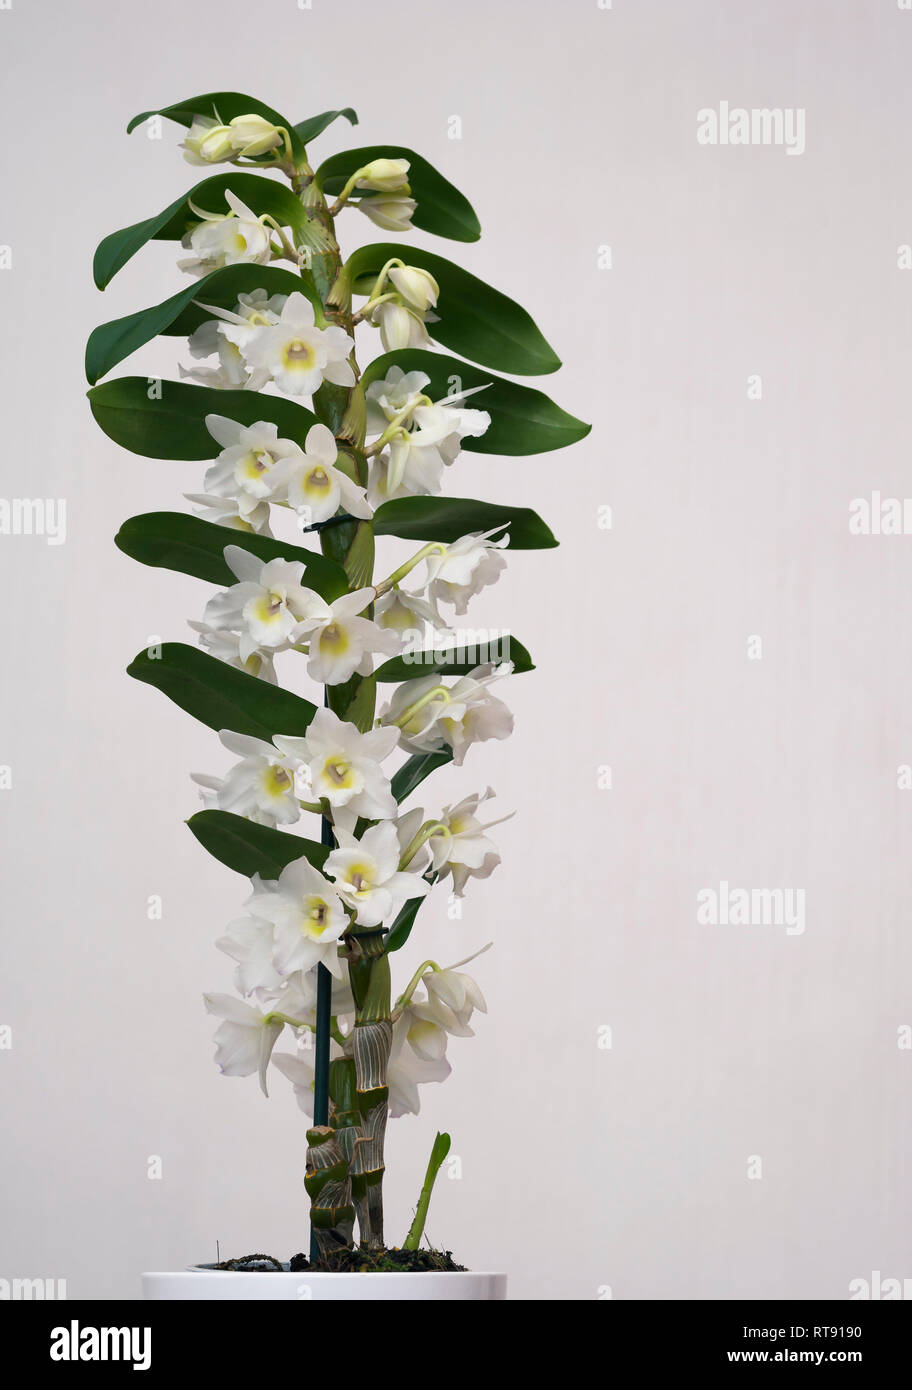 Orchid plant, Dendrobium Nobile, Spring Dream, Apollon, pictured against a  plain light background Stock Photo - Alamy